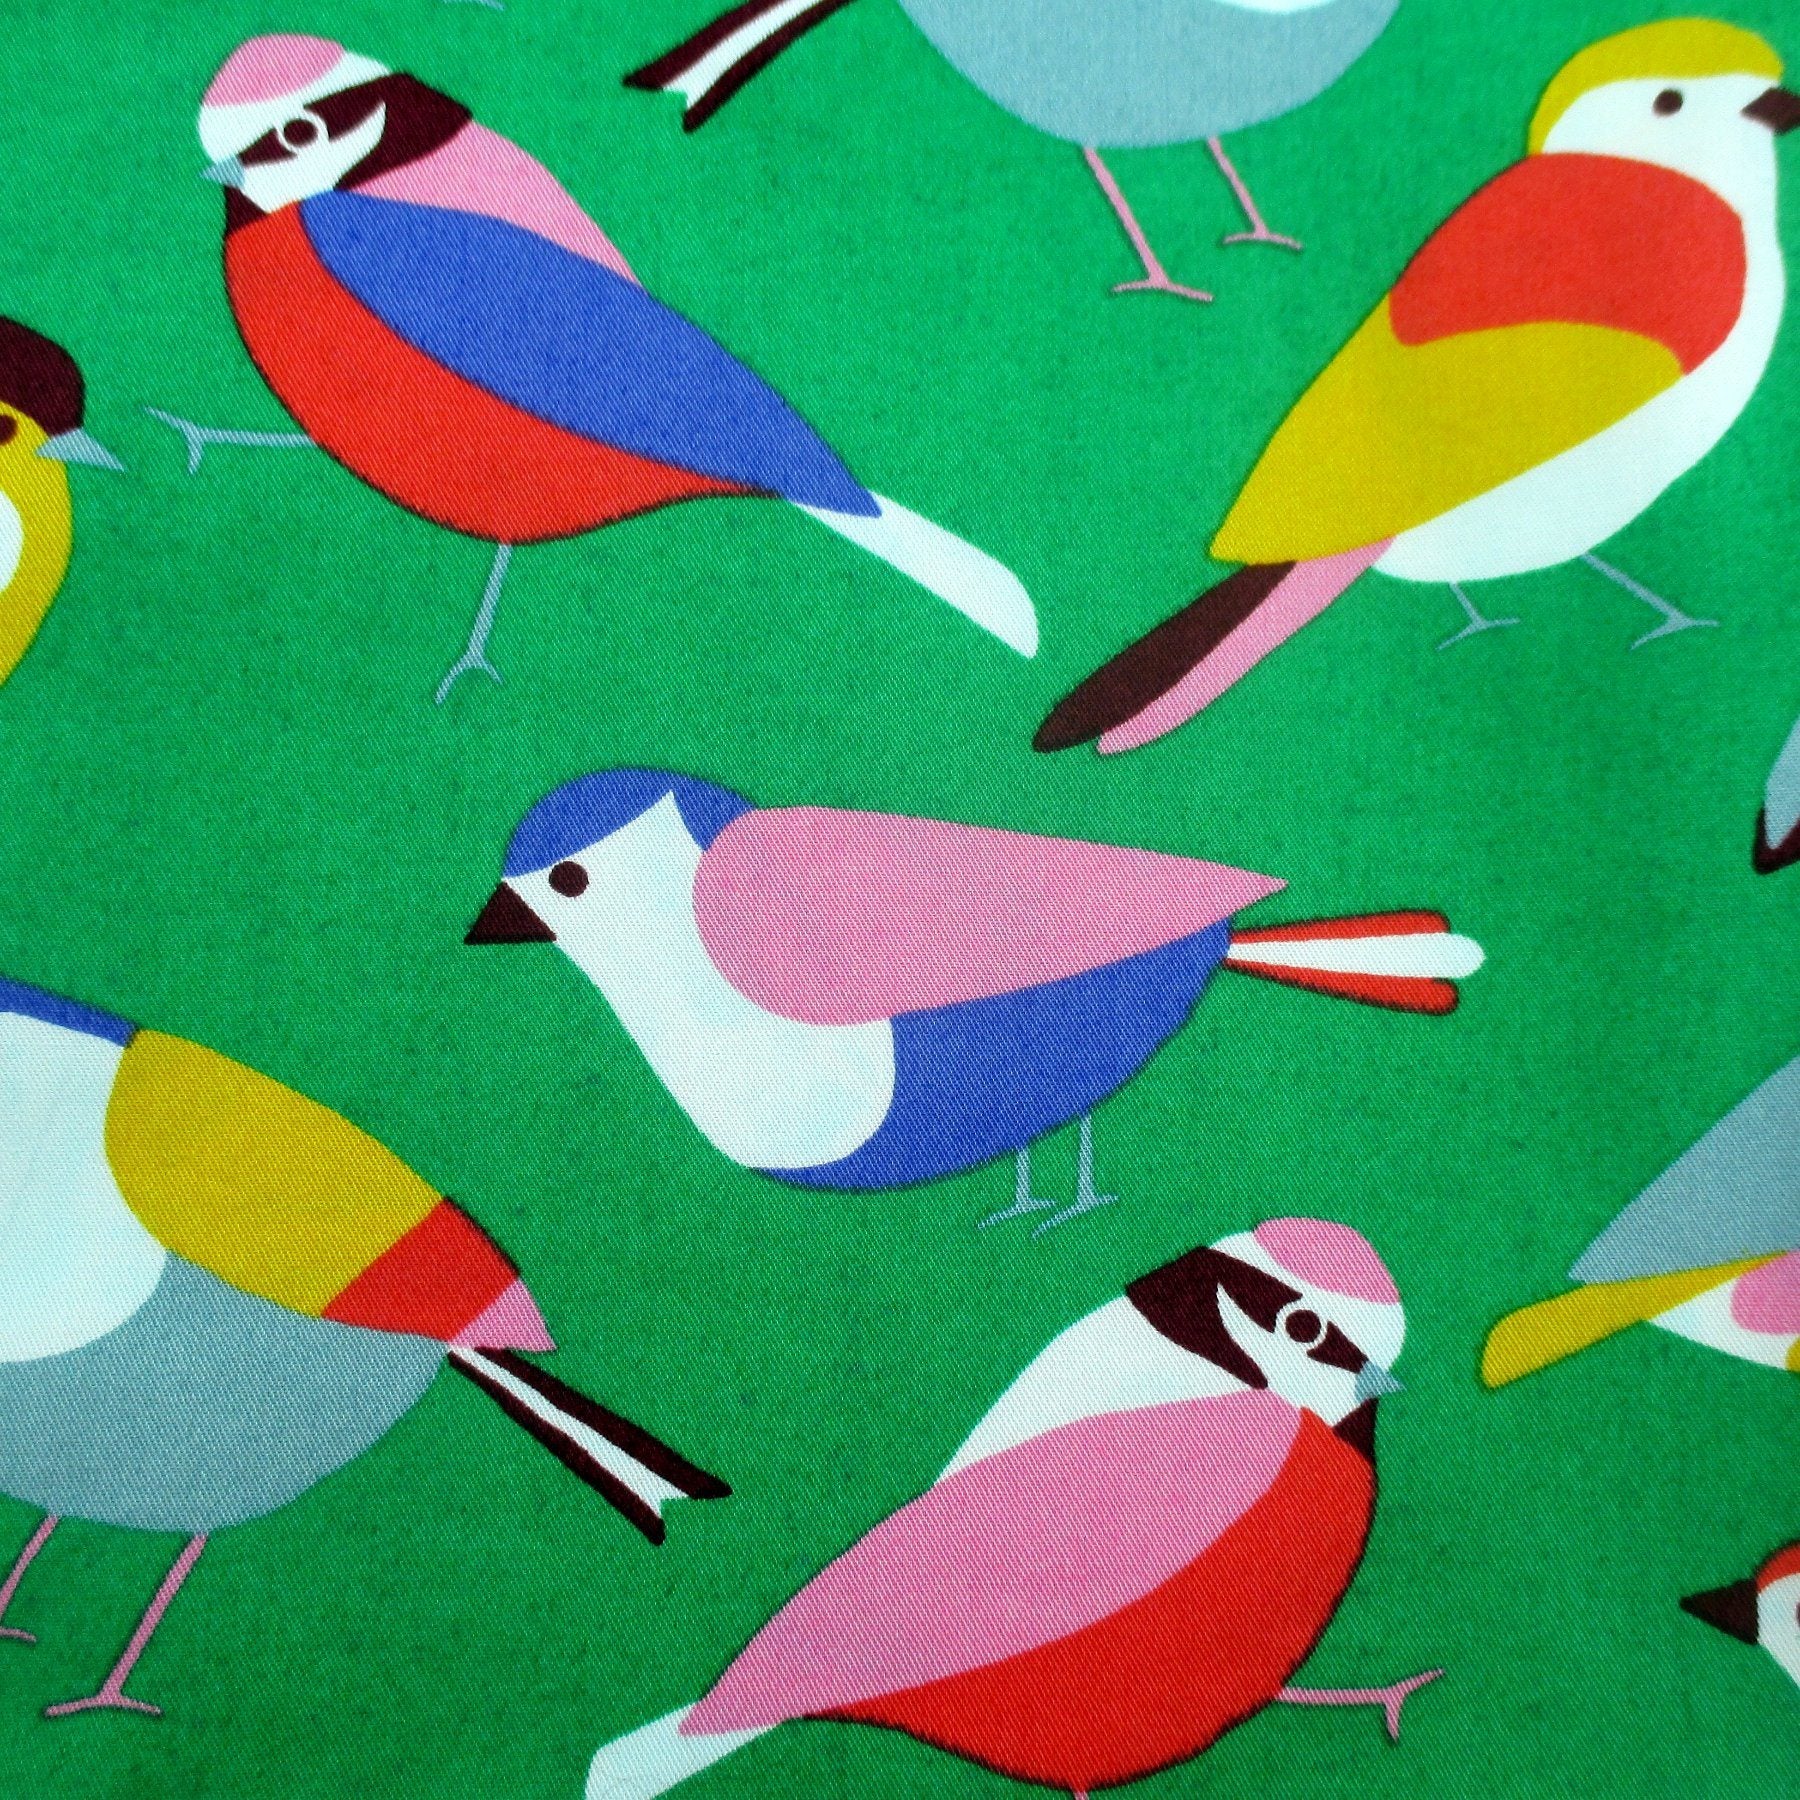 Bright Green Bird All Over Print Mini Cross Body Duck Tote Bag for Women